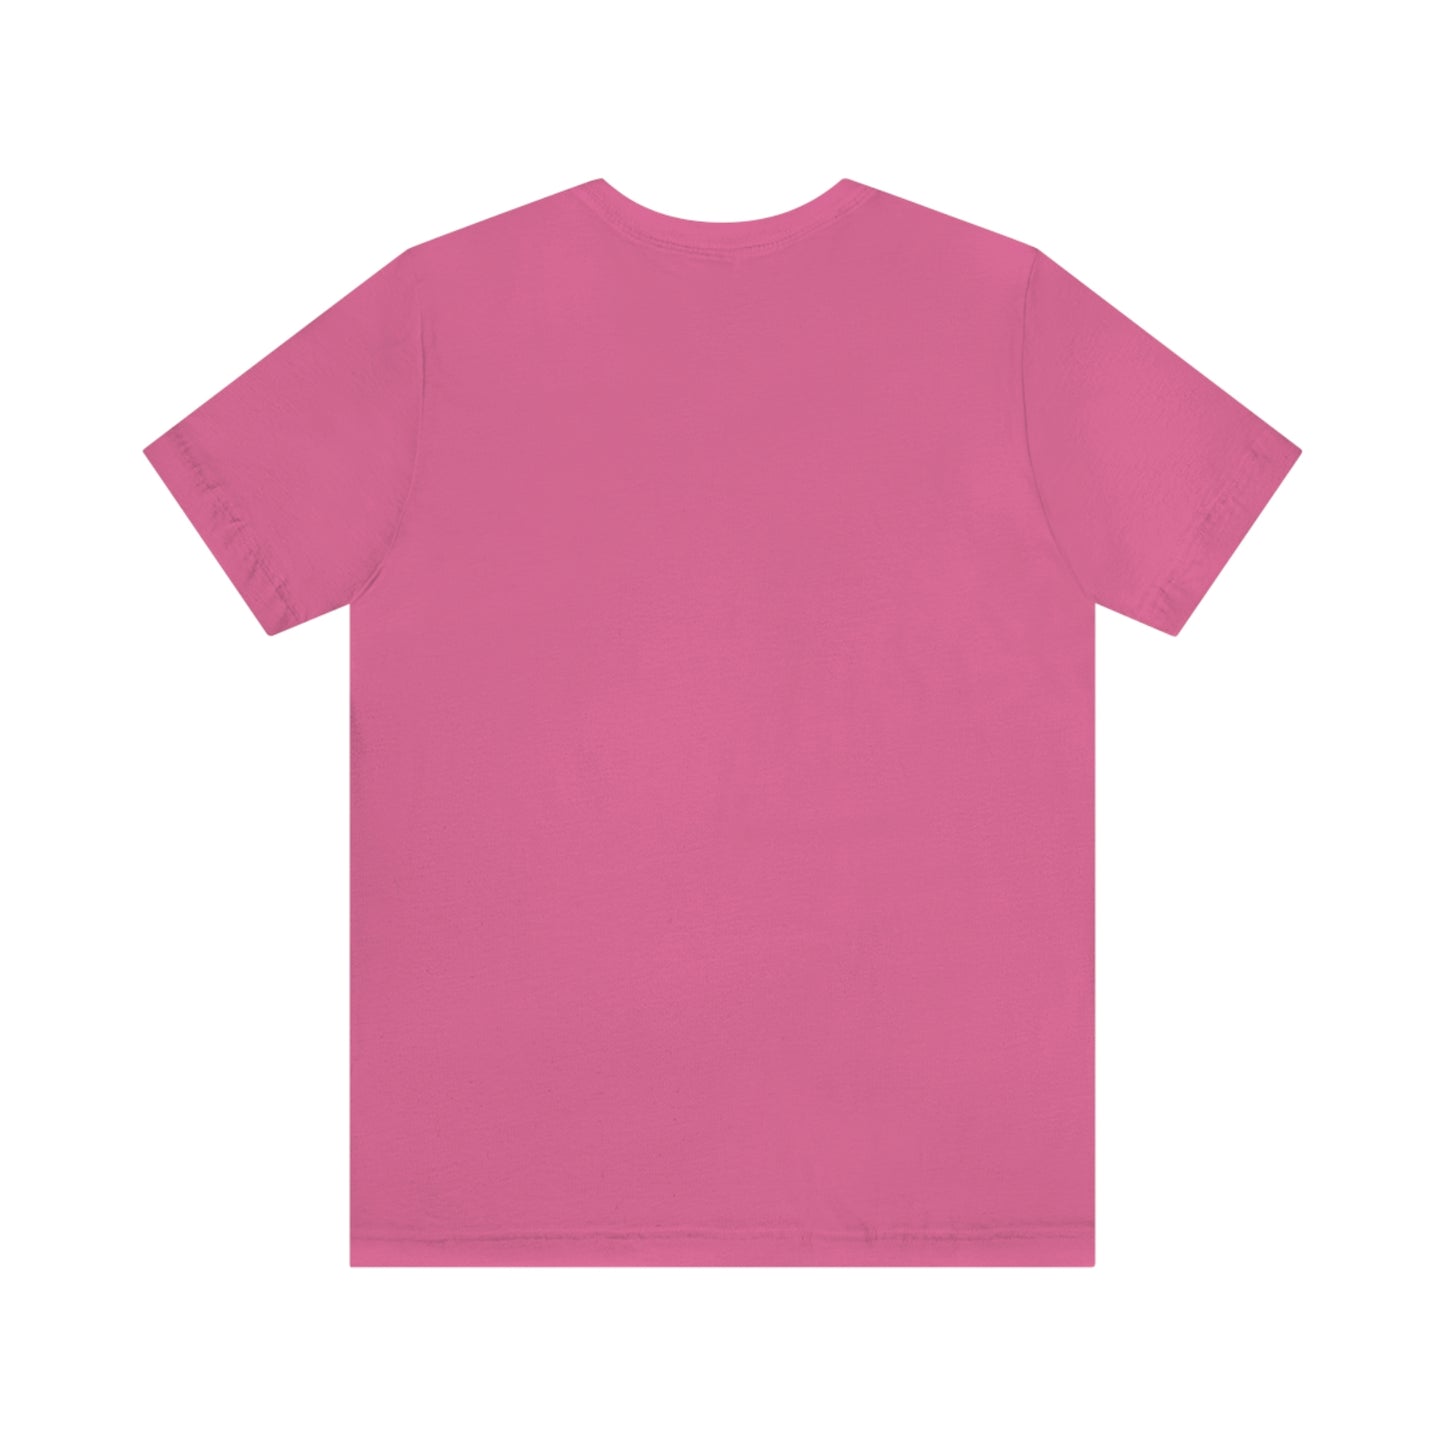 Slowpoke Team Shirt Charity Pink